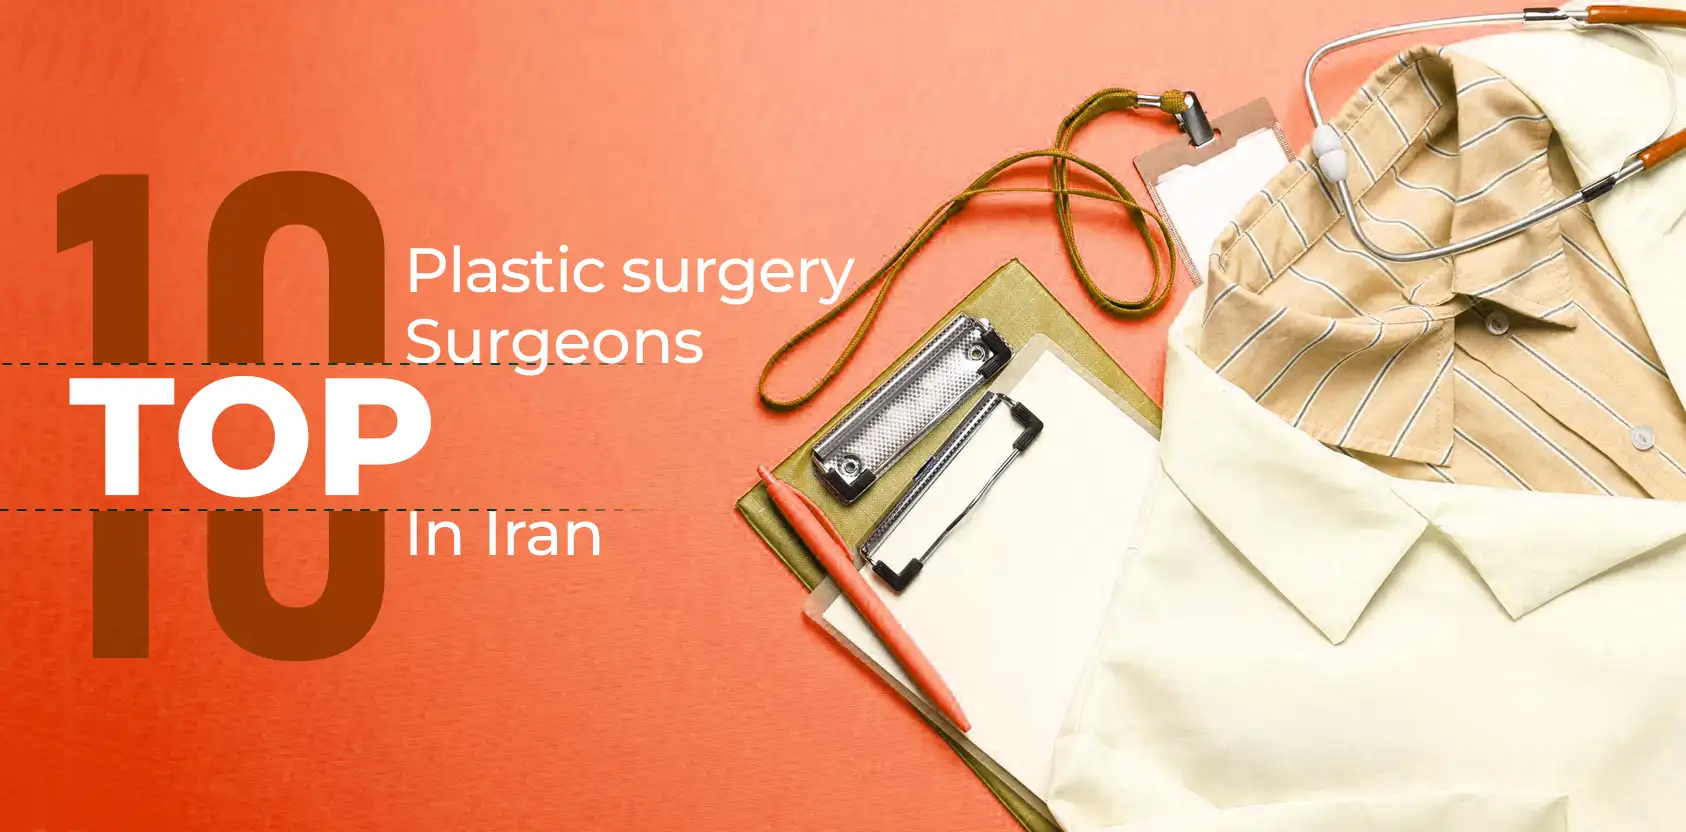 Best plastic surgery surgeon in iran